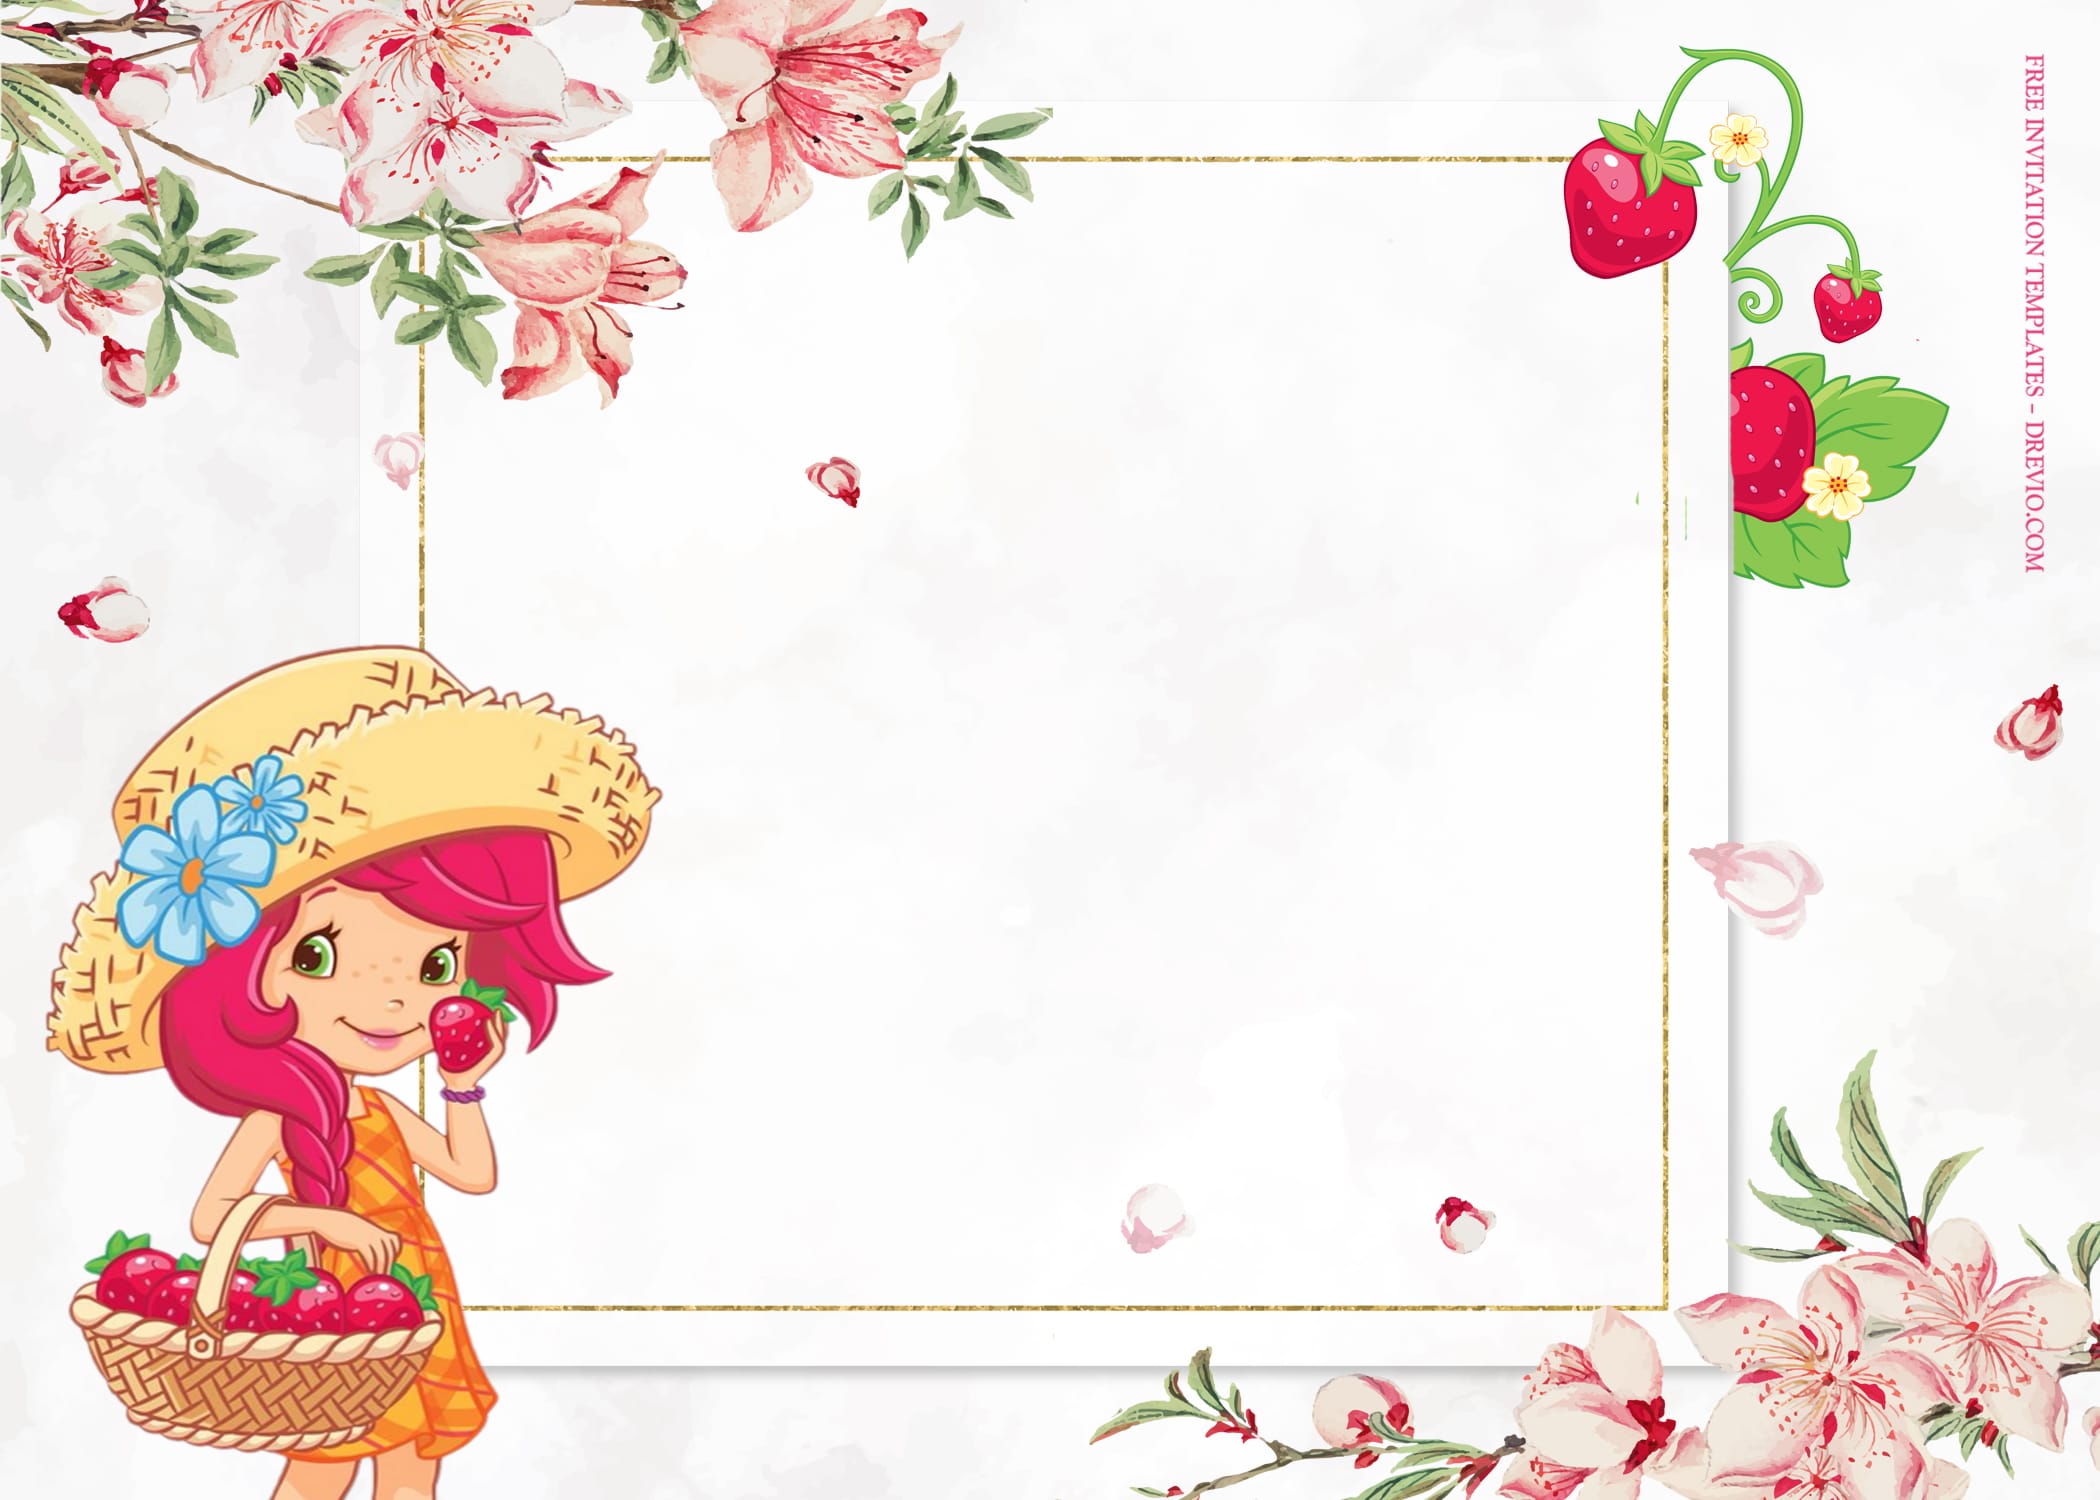 8+ Strawberry Shortcake With Sakura Blossom Birthday Invitation Templates Type Three